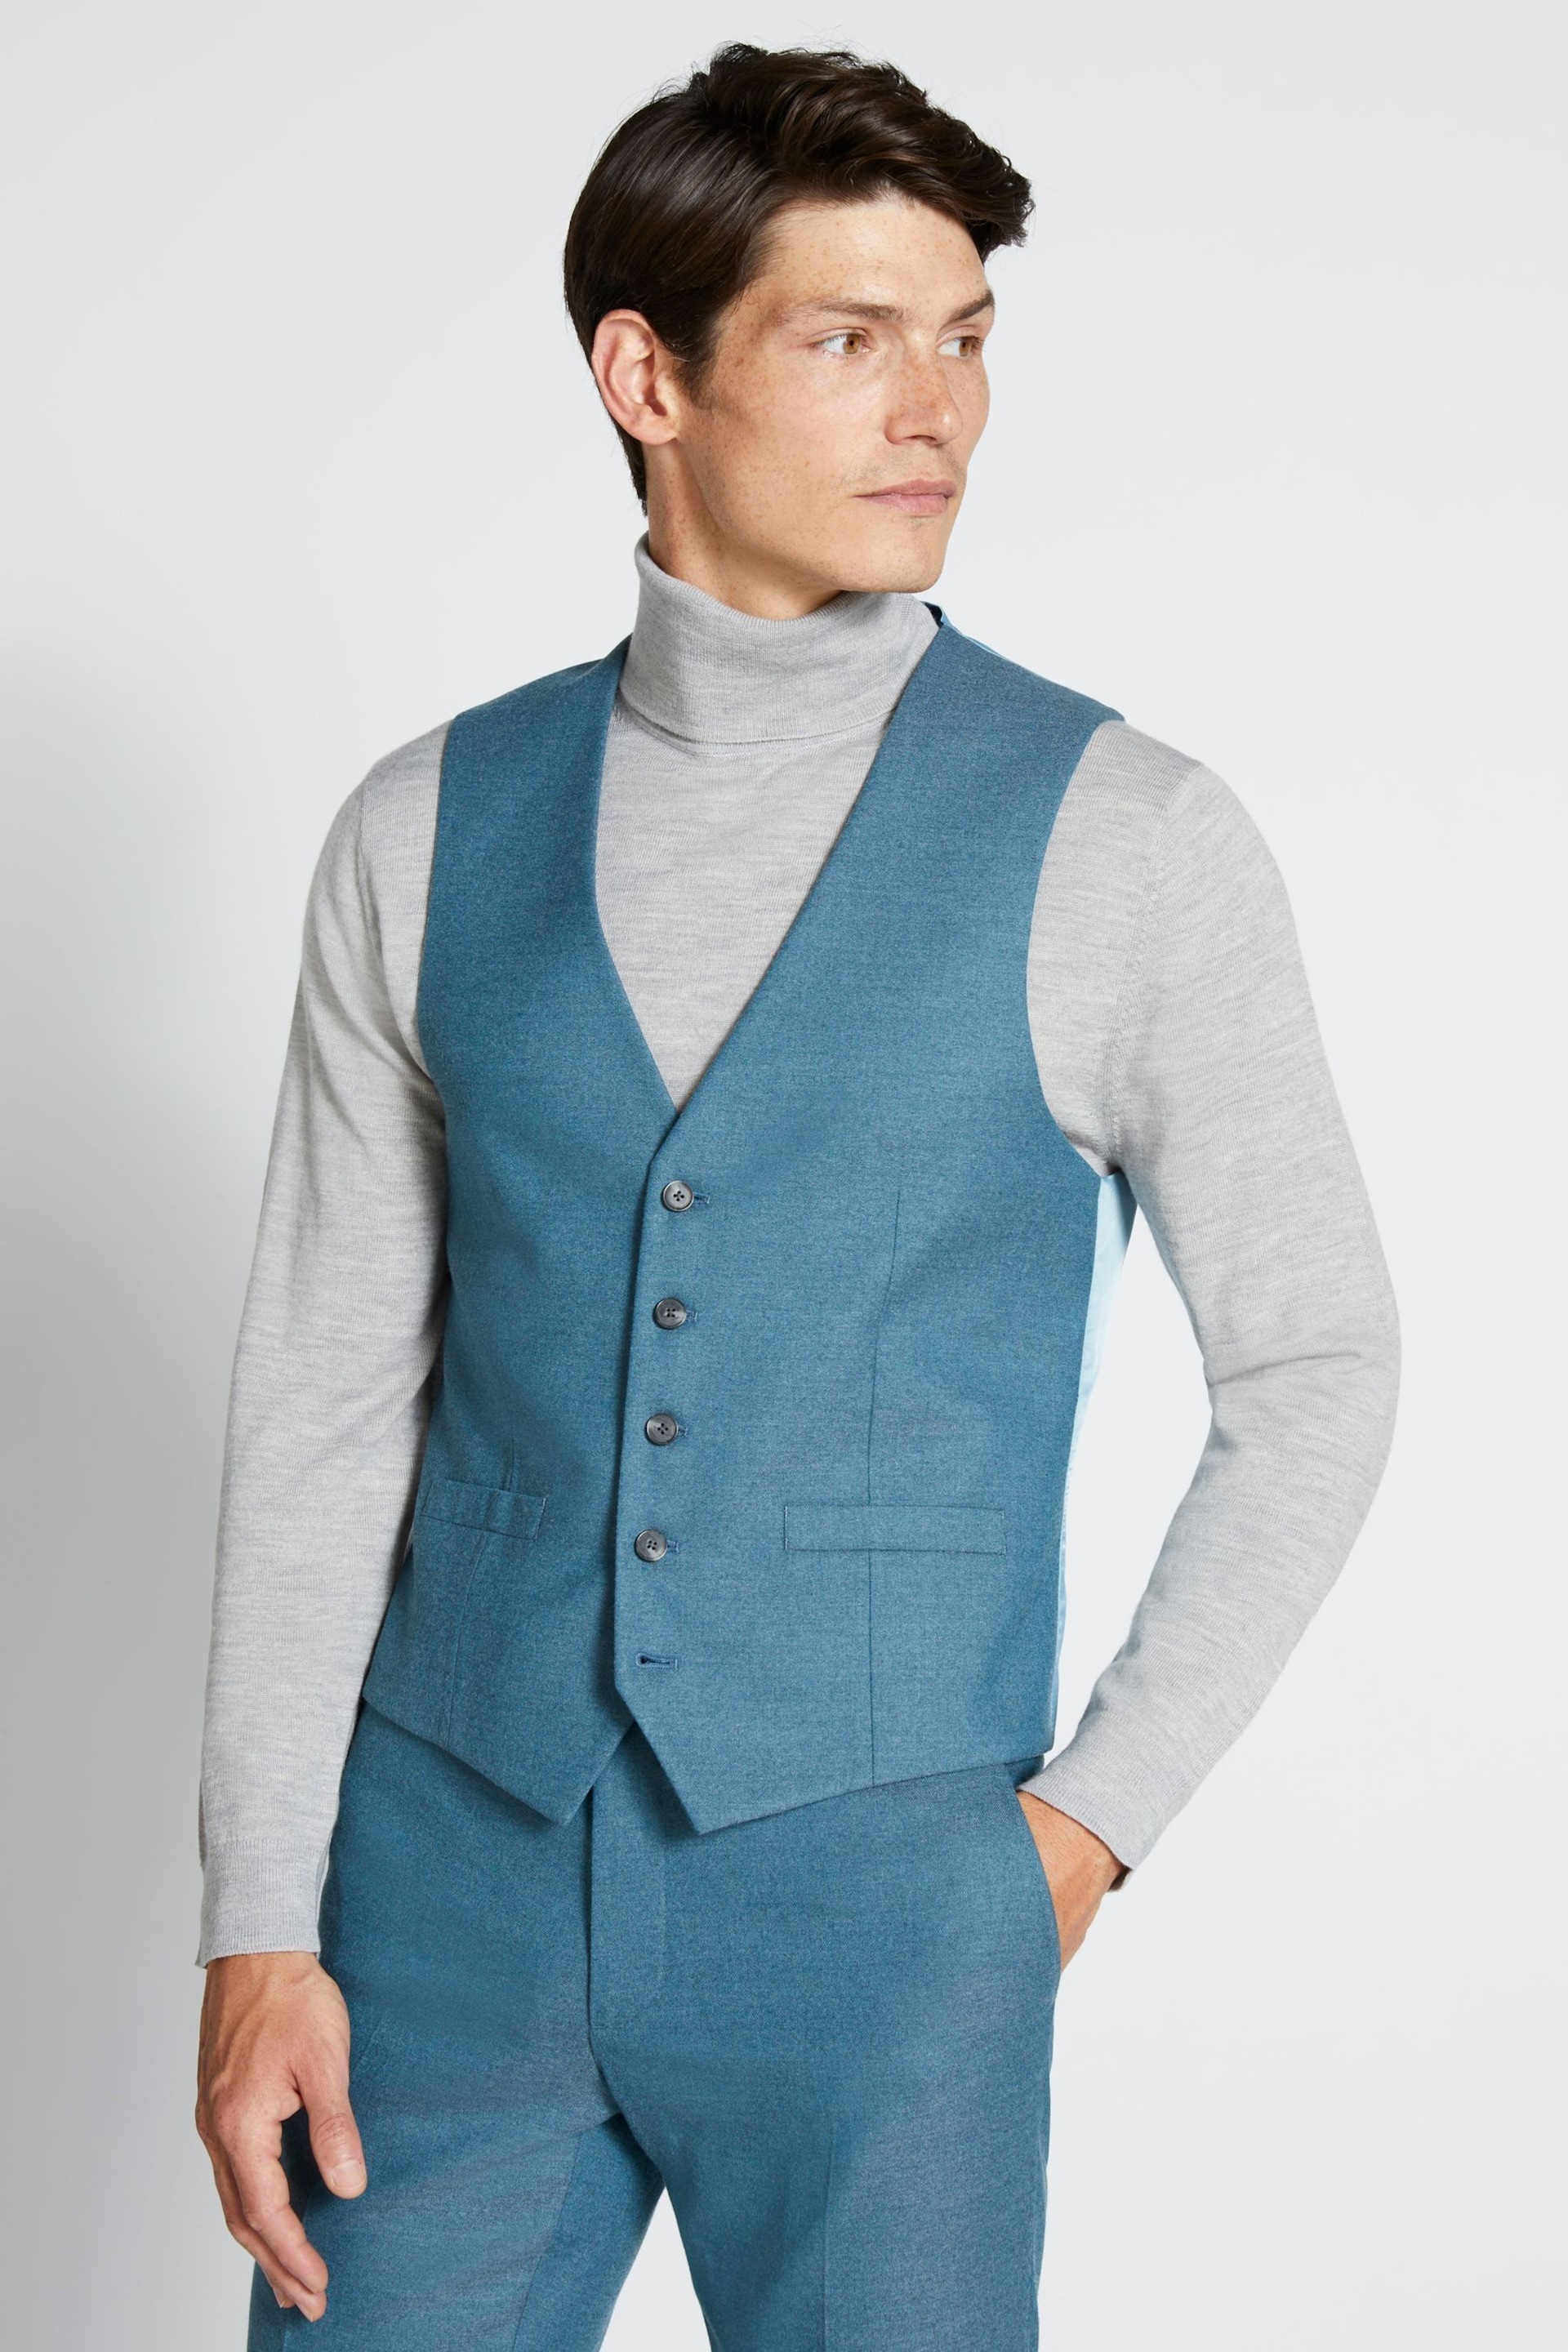 MOSS Blue Flannel Suit Waistcoat - Image 1 of 3